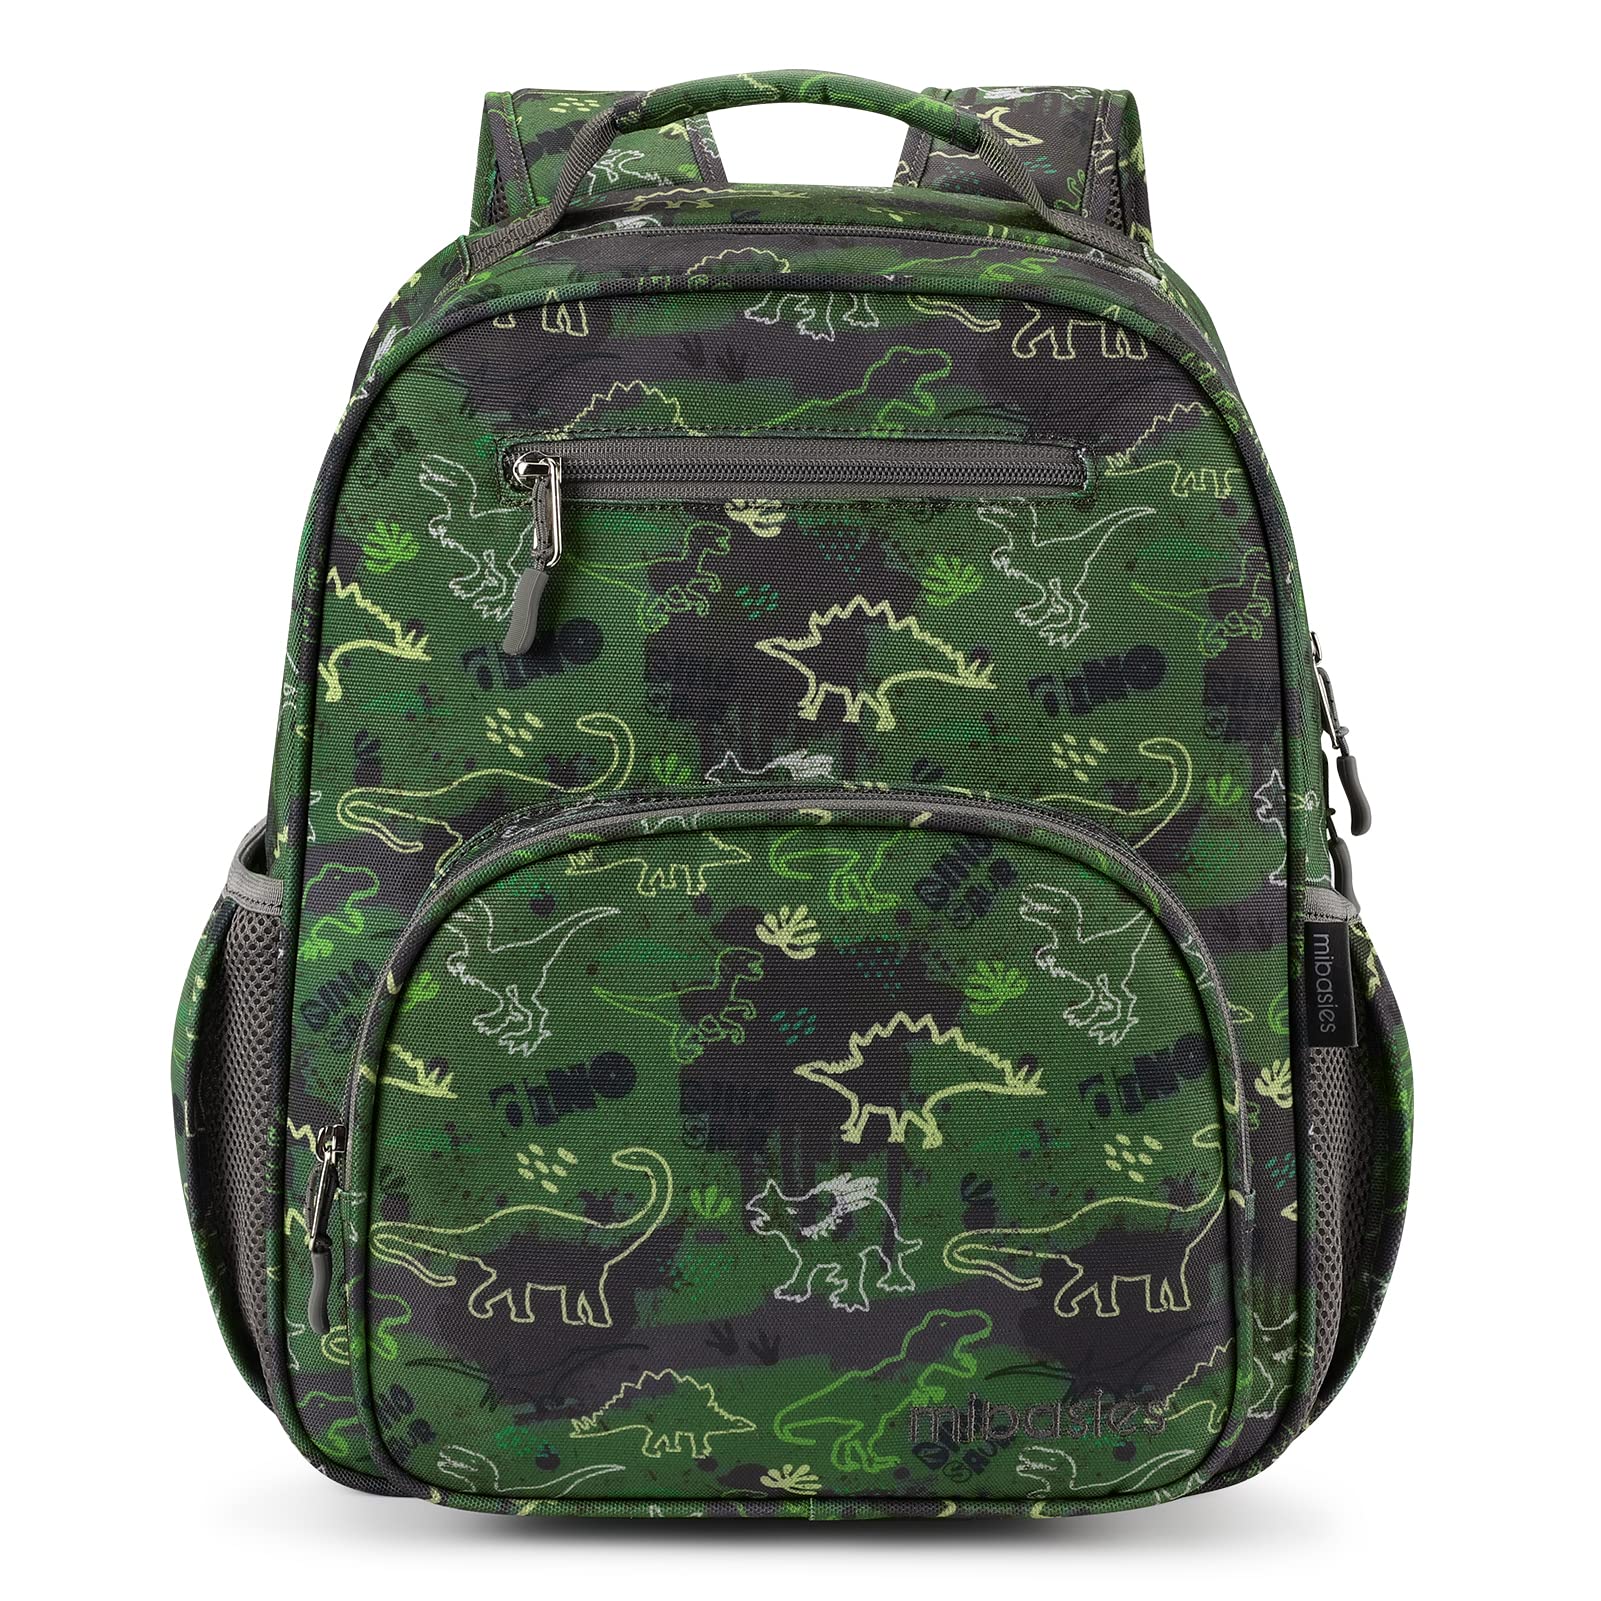 Mr. Dino Backpack schoolbag Mibasies 14L Green Dinosaur 